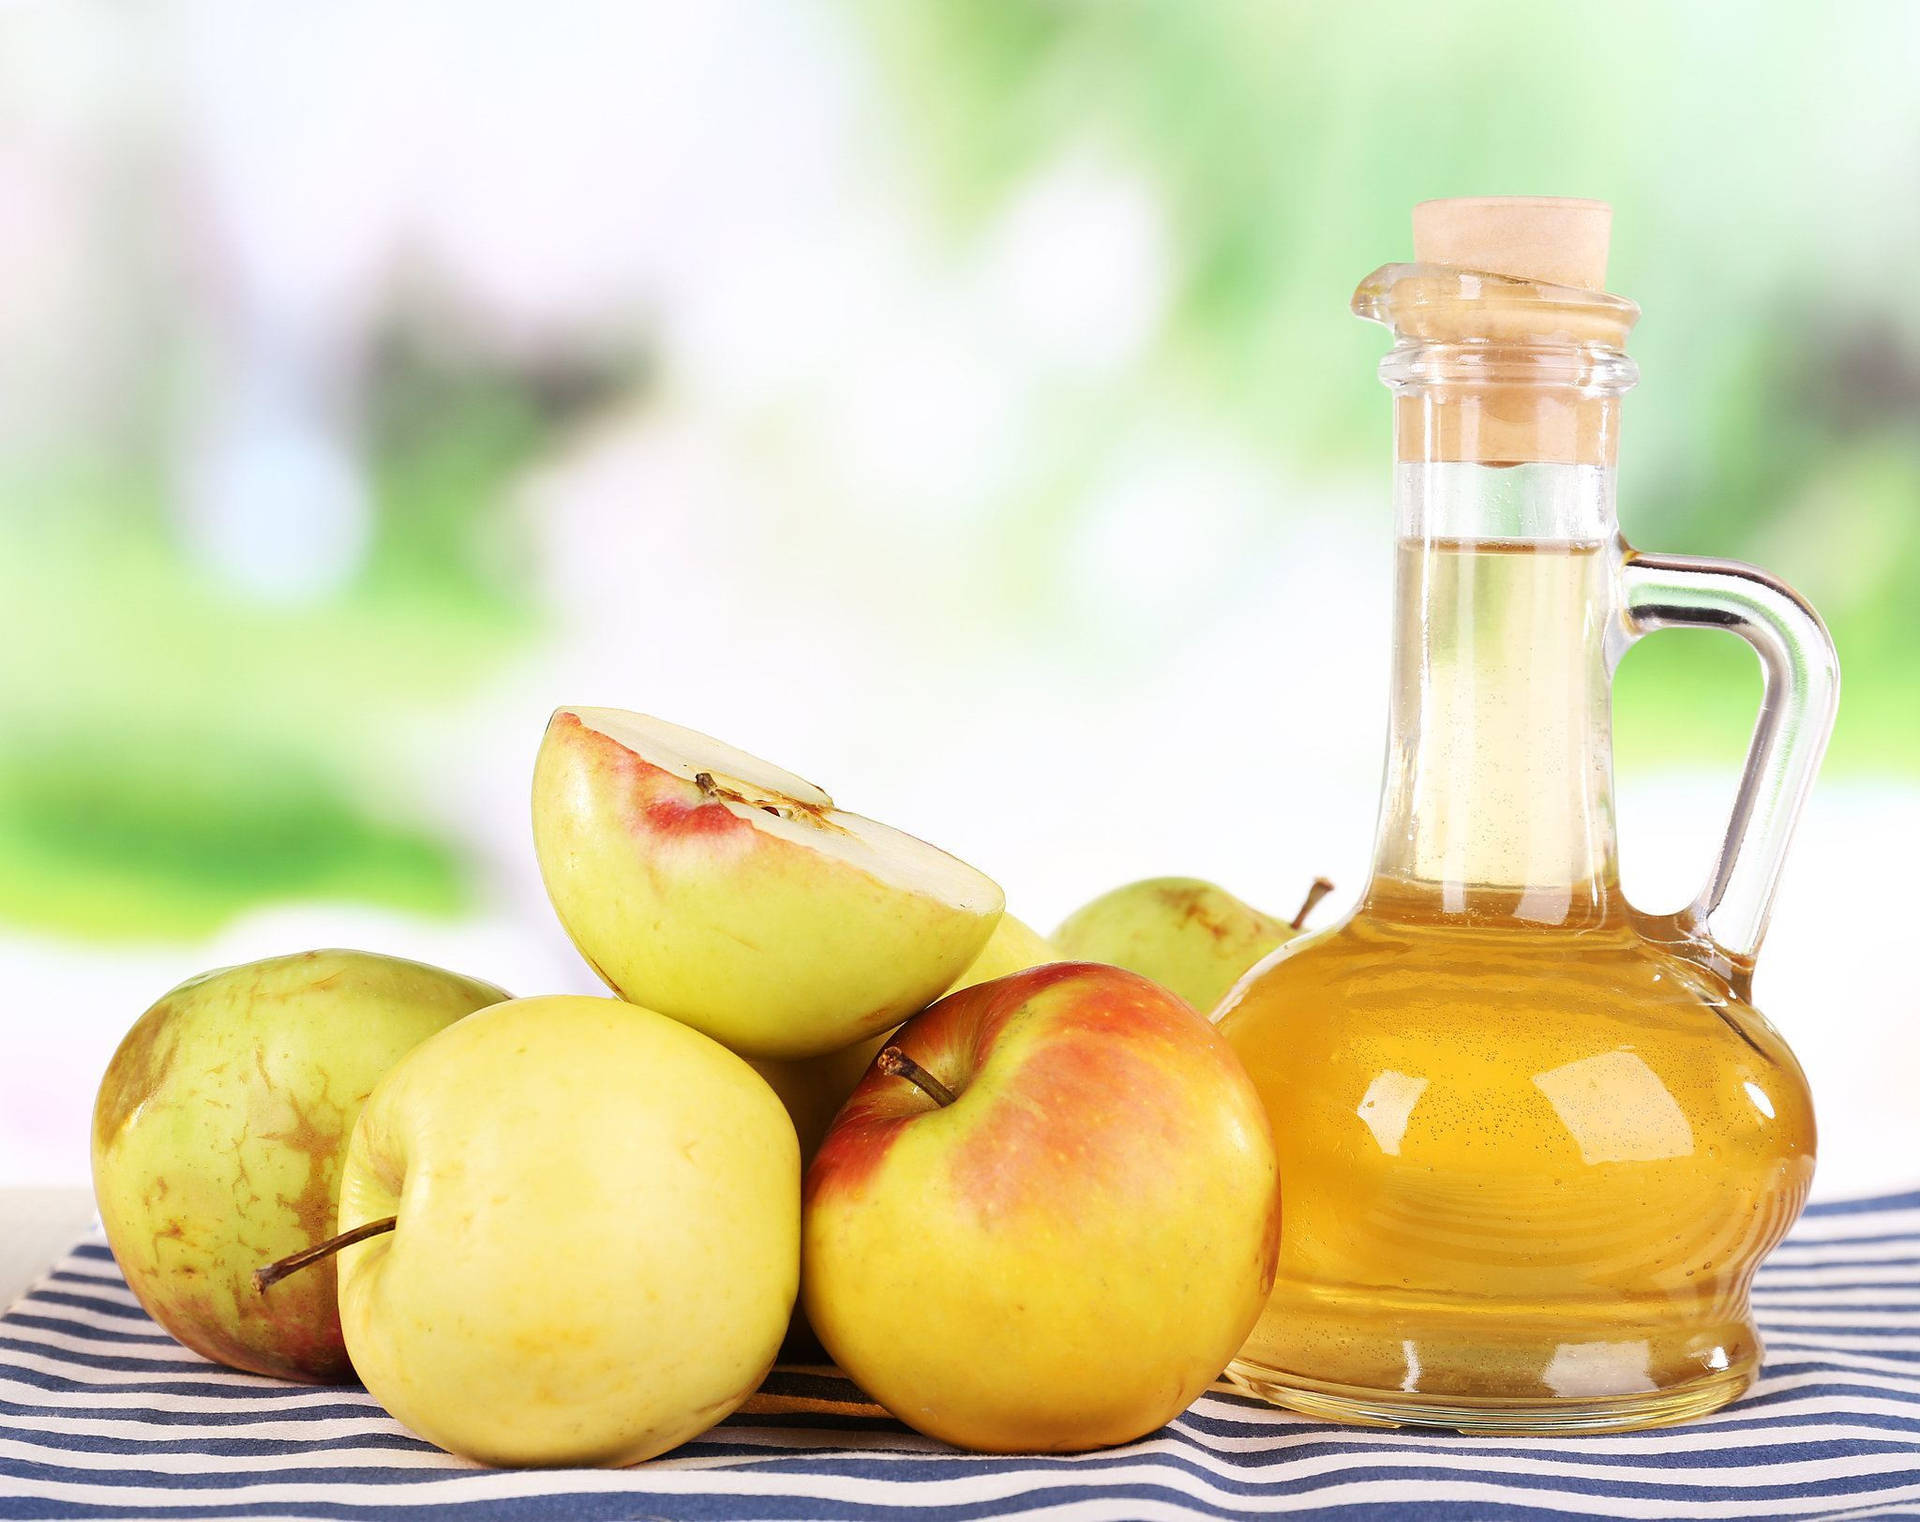 Apple Fruits And Apple Cider Vinegar Wallpaper